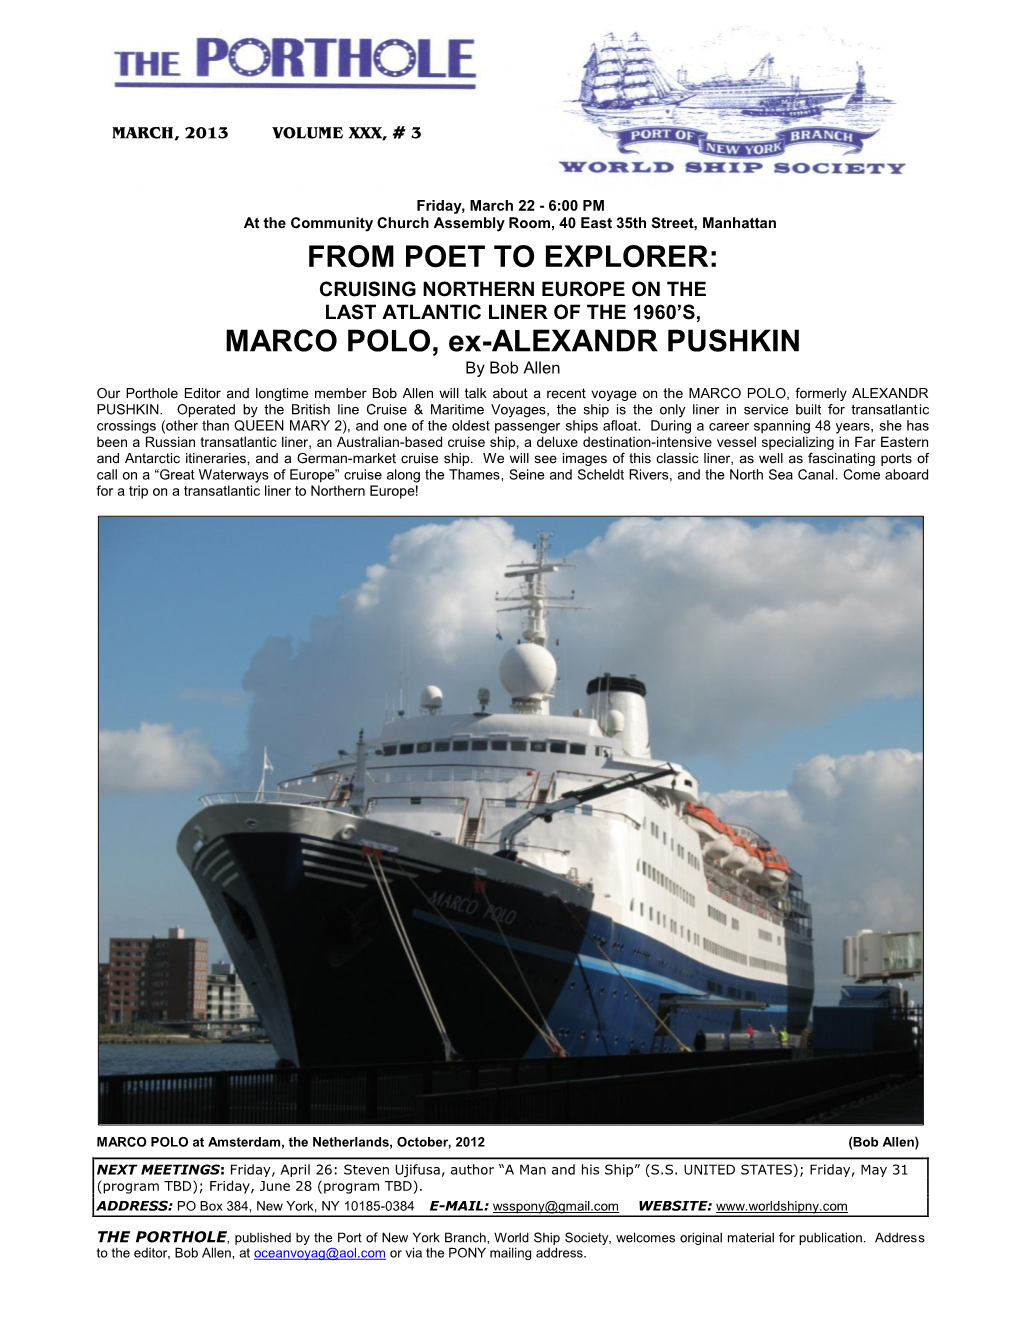 FROM POET to EXPLORER: MARCO POLO, Ex-ALEXANDR PUSHKIN